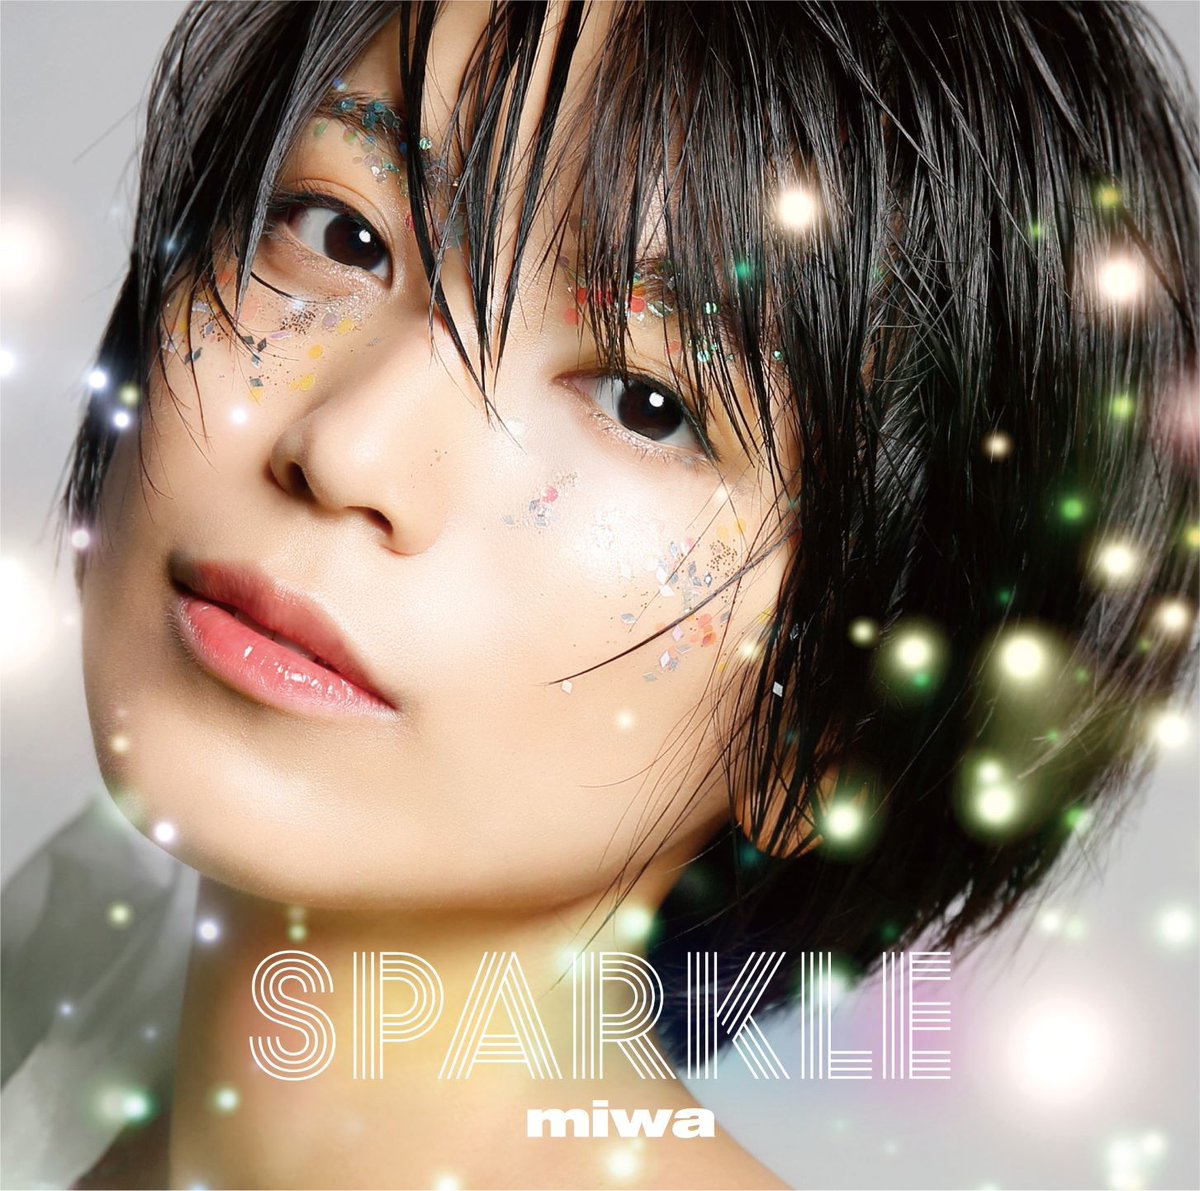 『miwa - Holiday 歌詞』収録の『Sparkle』ジャケット